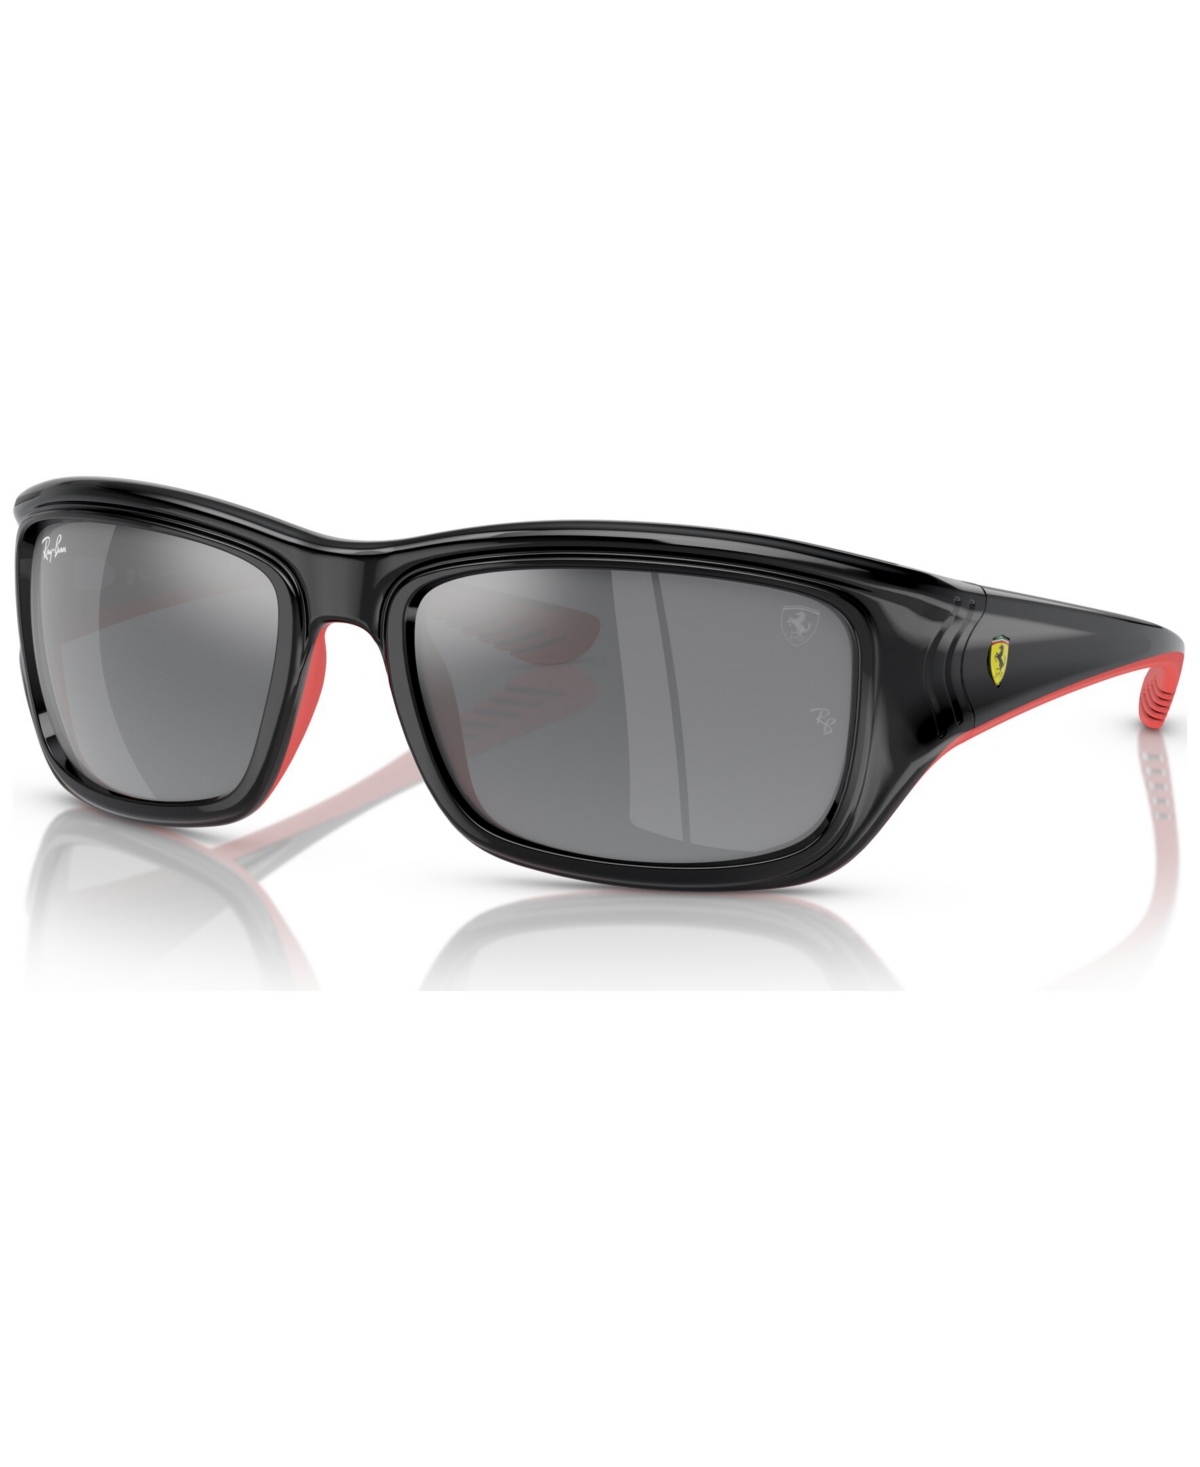 Ray Ban Sunglasses Male Rb4405m Scuderia Ferrari Collection - Black On Red Frame Silver Lenses 59-19